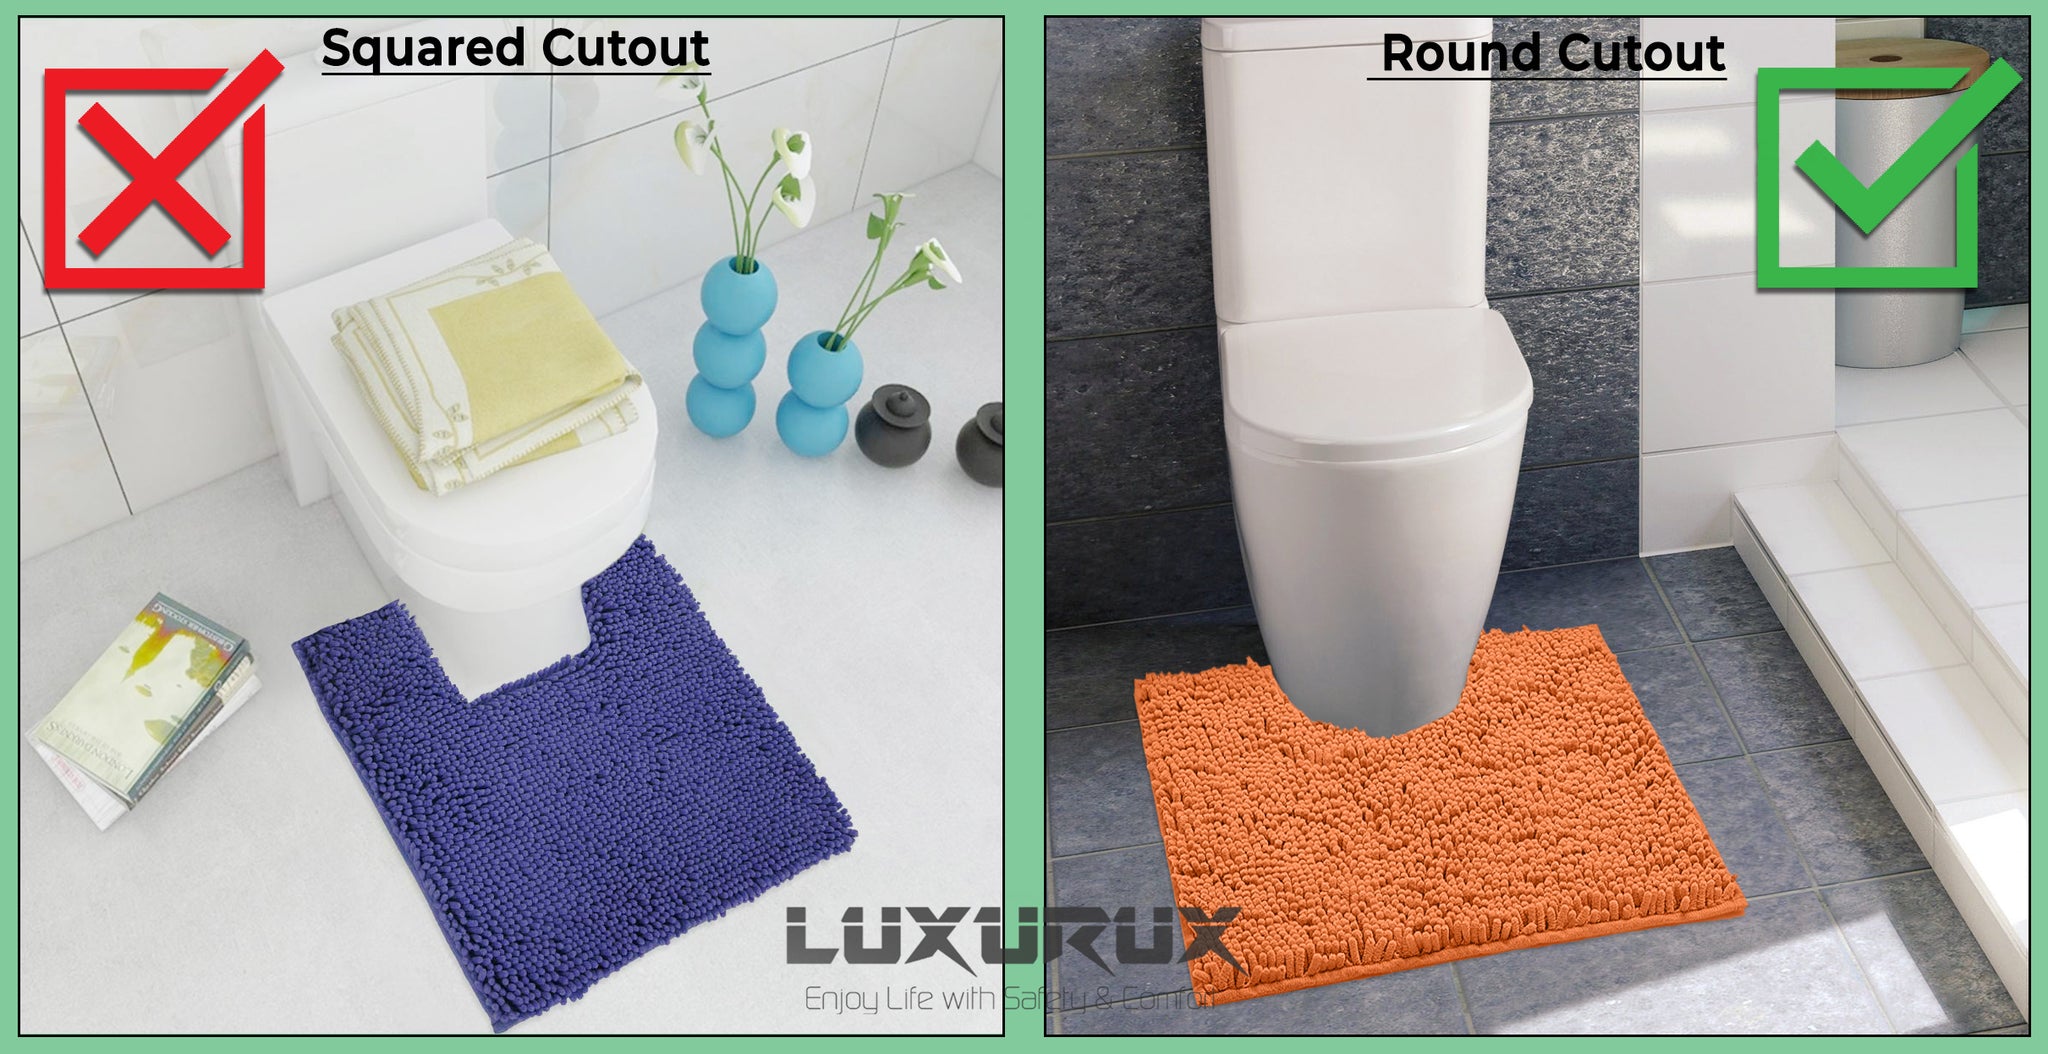 Bath Mat by LuxUrux Extra-Soft Plush Non-Slip Bathroom Rug Luxury Chenille Microfiber Material Super Absorbent Shaggy Bath Rug Machine Wash & Dry